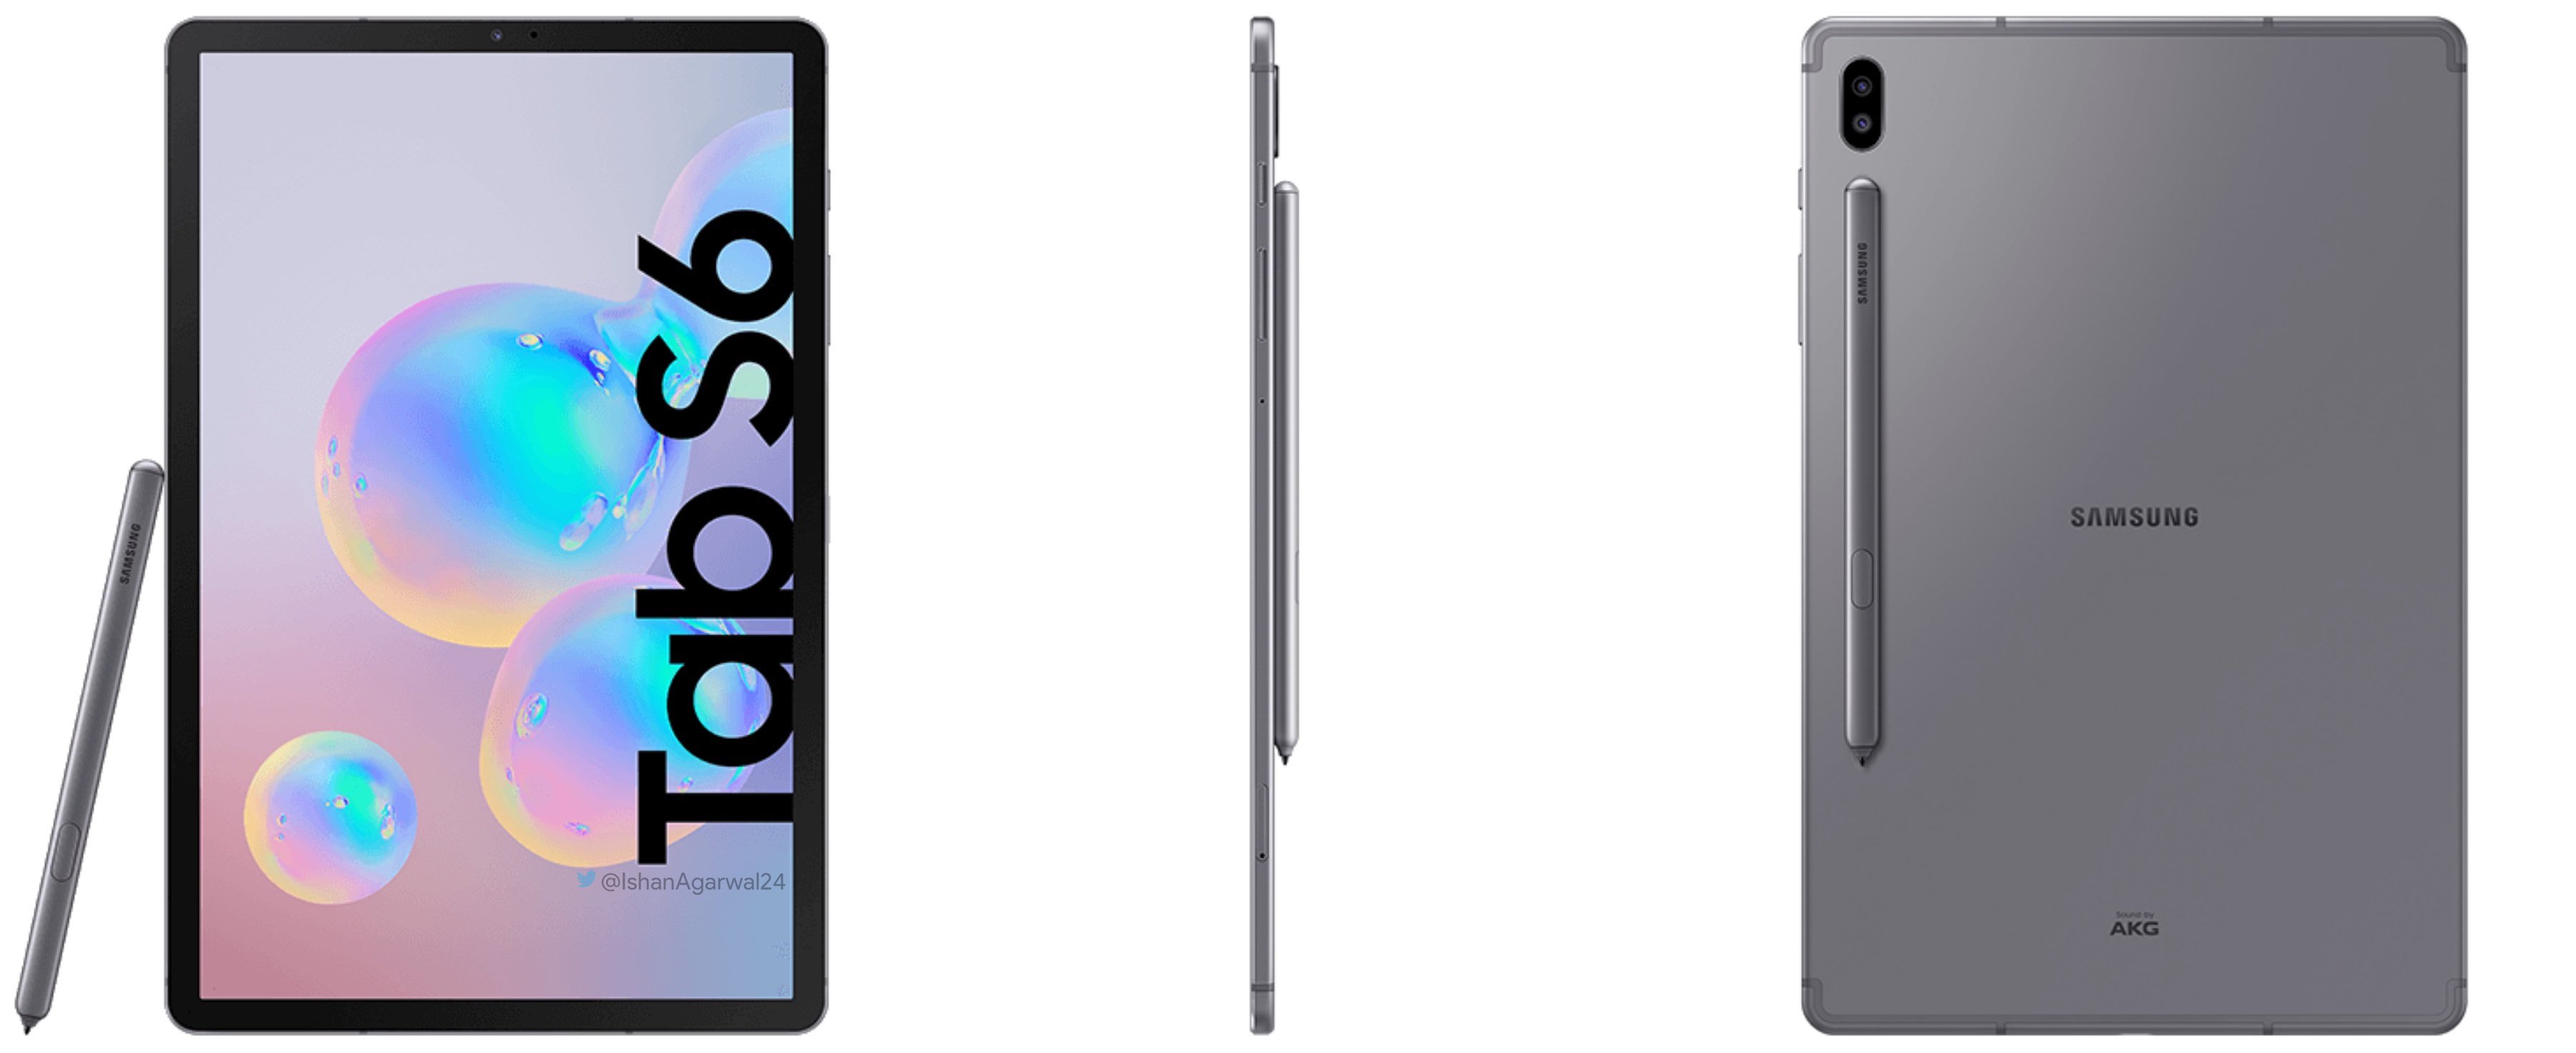 Samsung Galaxy Tab S6 specs leak reveal dimensions ...